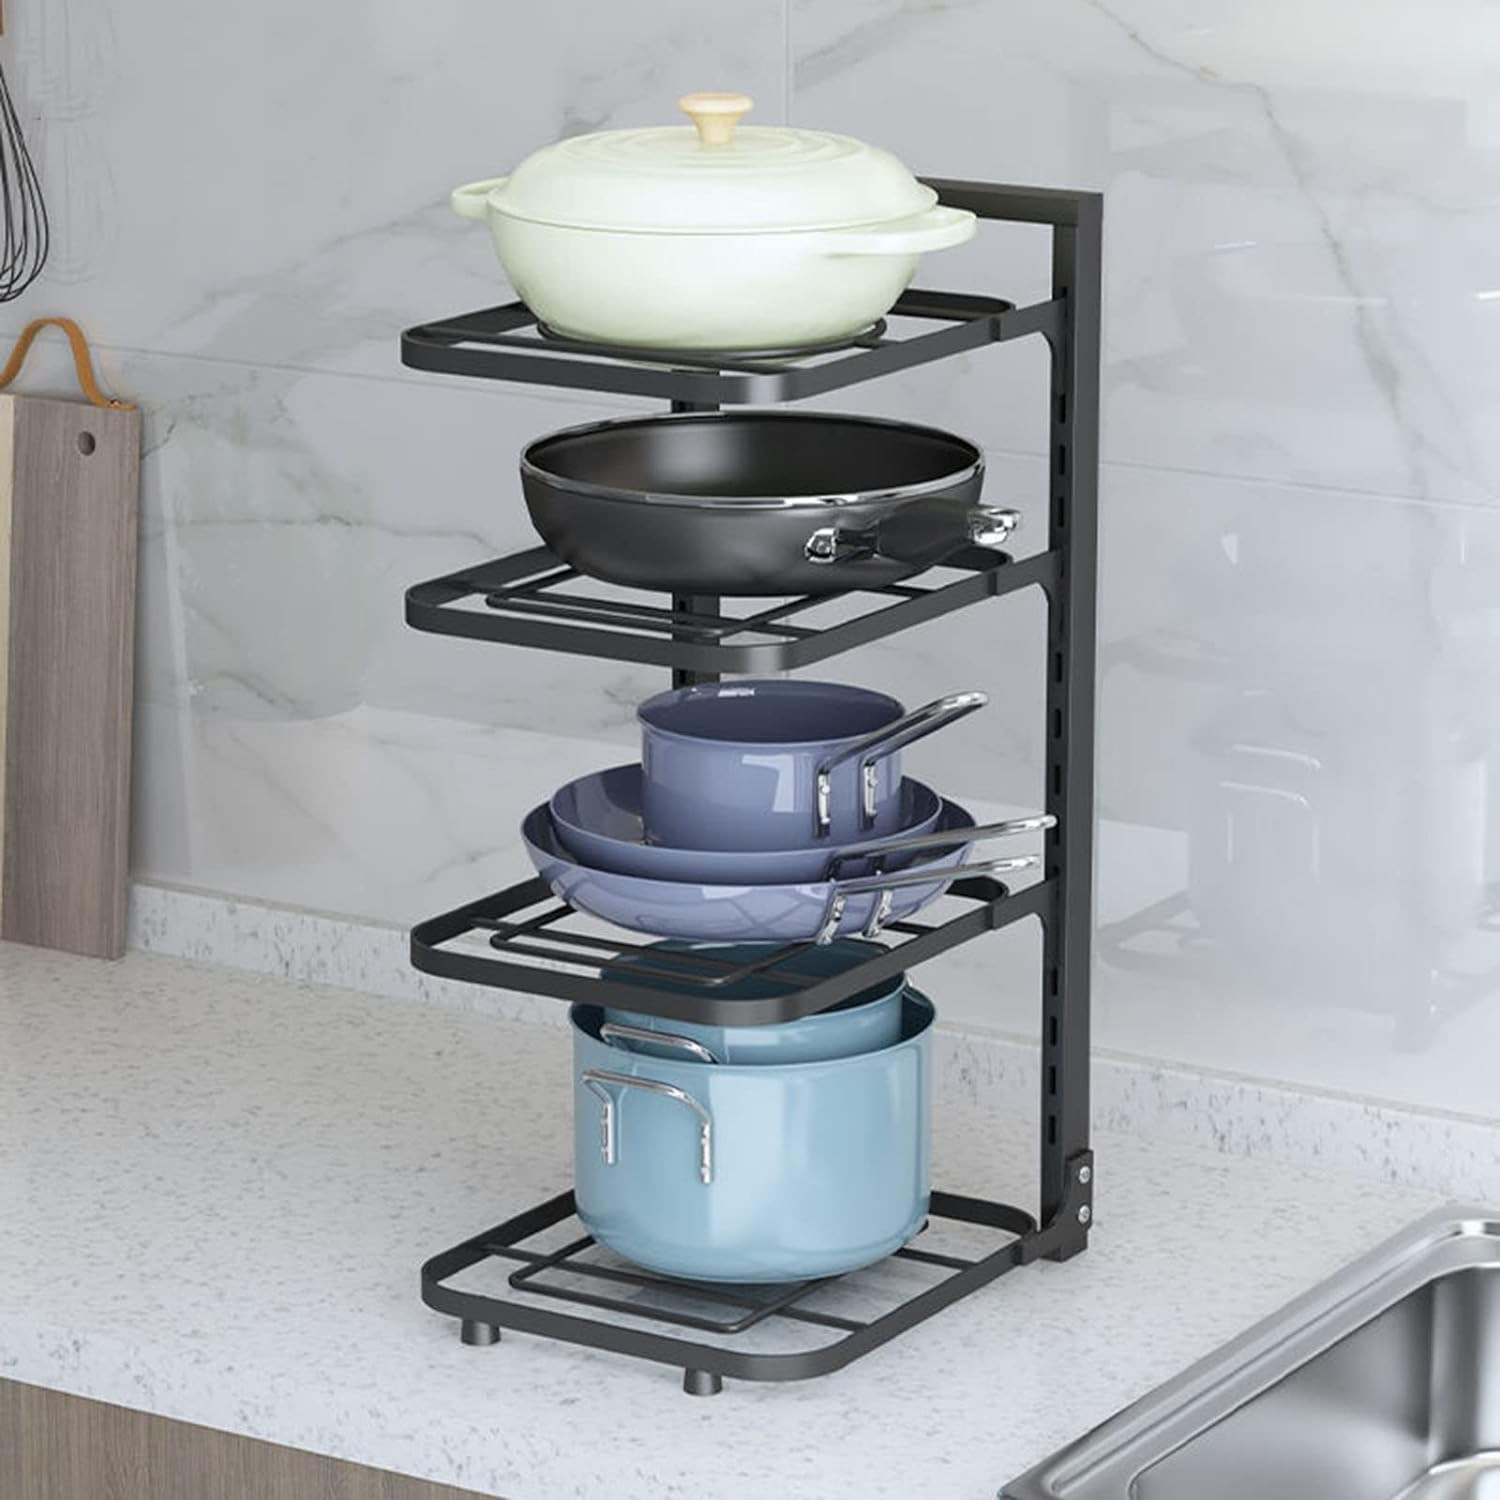 Kuber Industries 4-Layer Pots and Pans Organiser Rack|Kitchen Organization And Storage|Adjustable Pot Lid Holder Rack|Home Kitchen Accessories (Black)